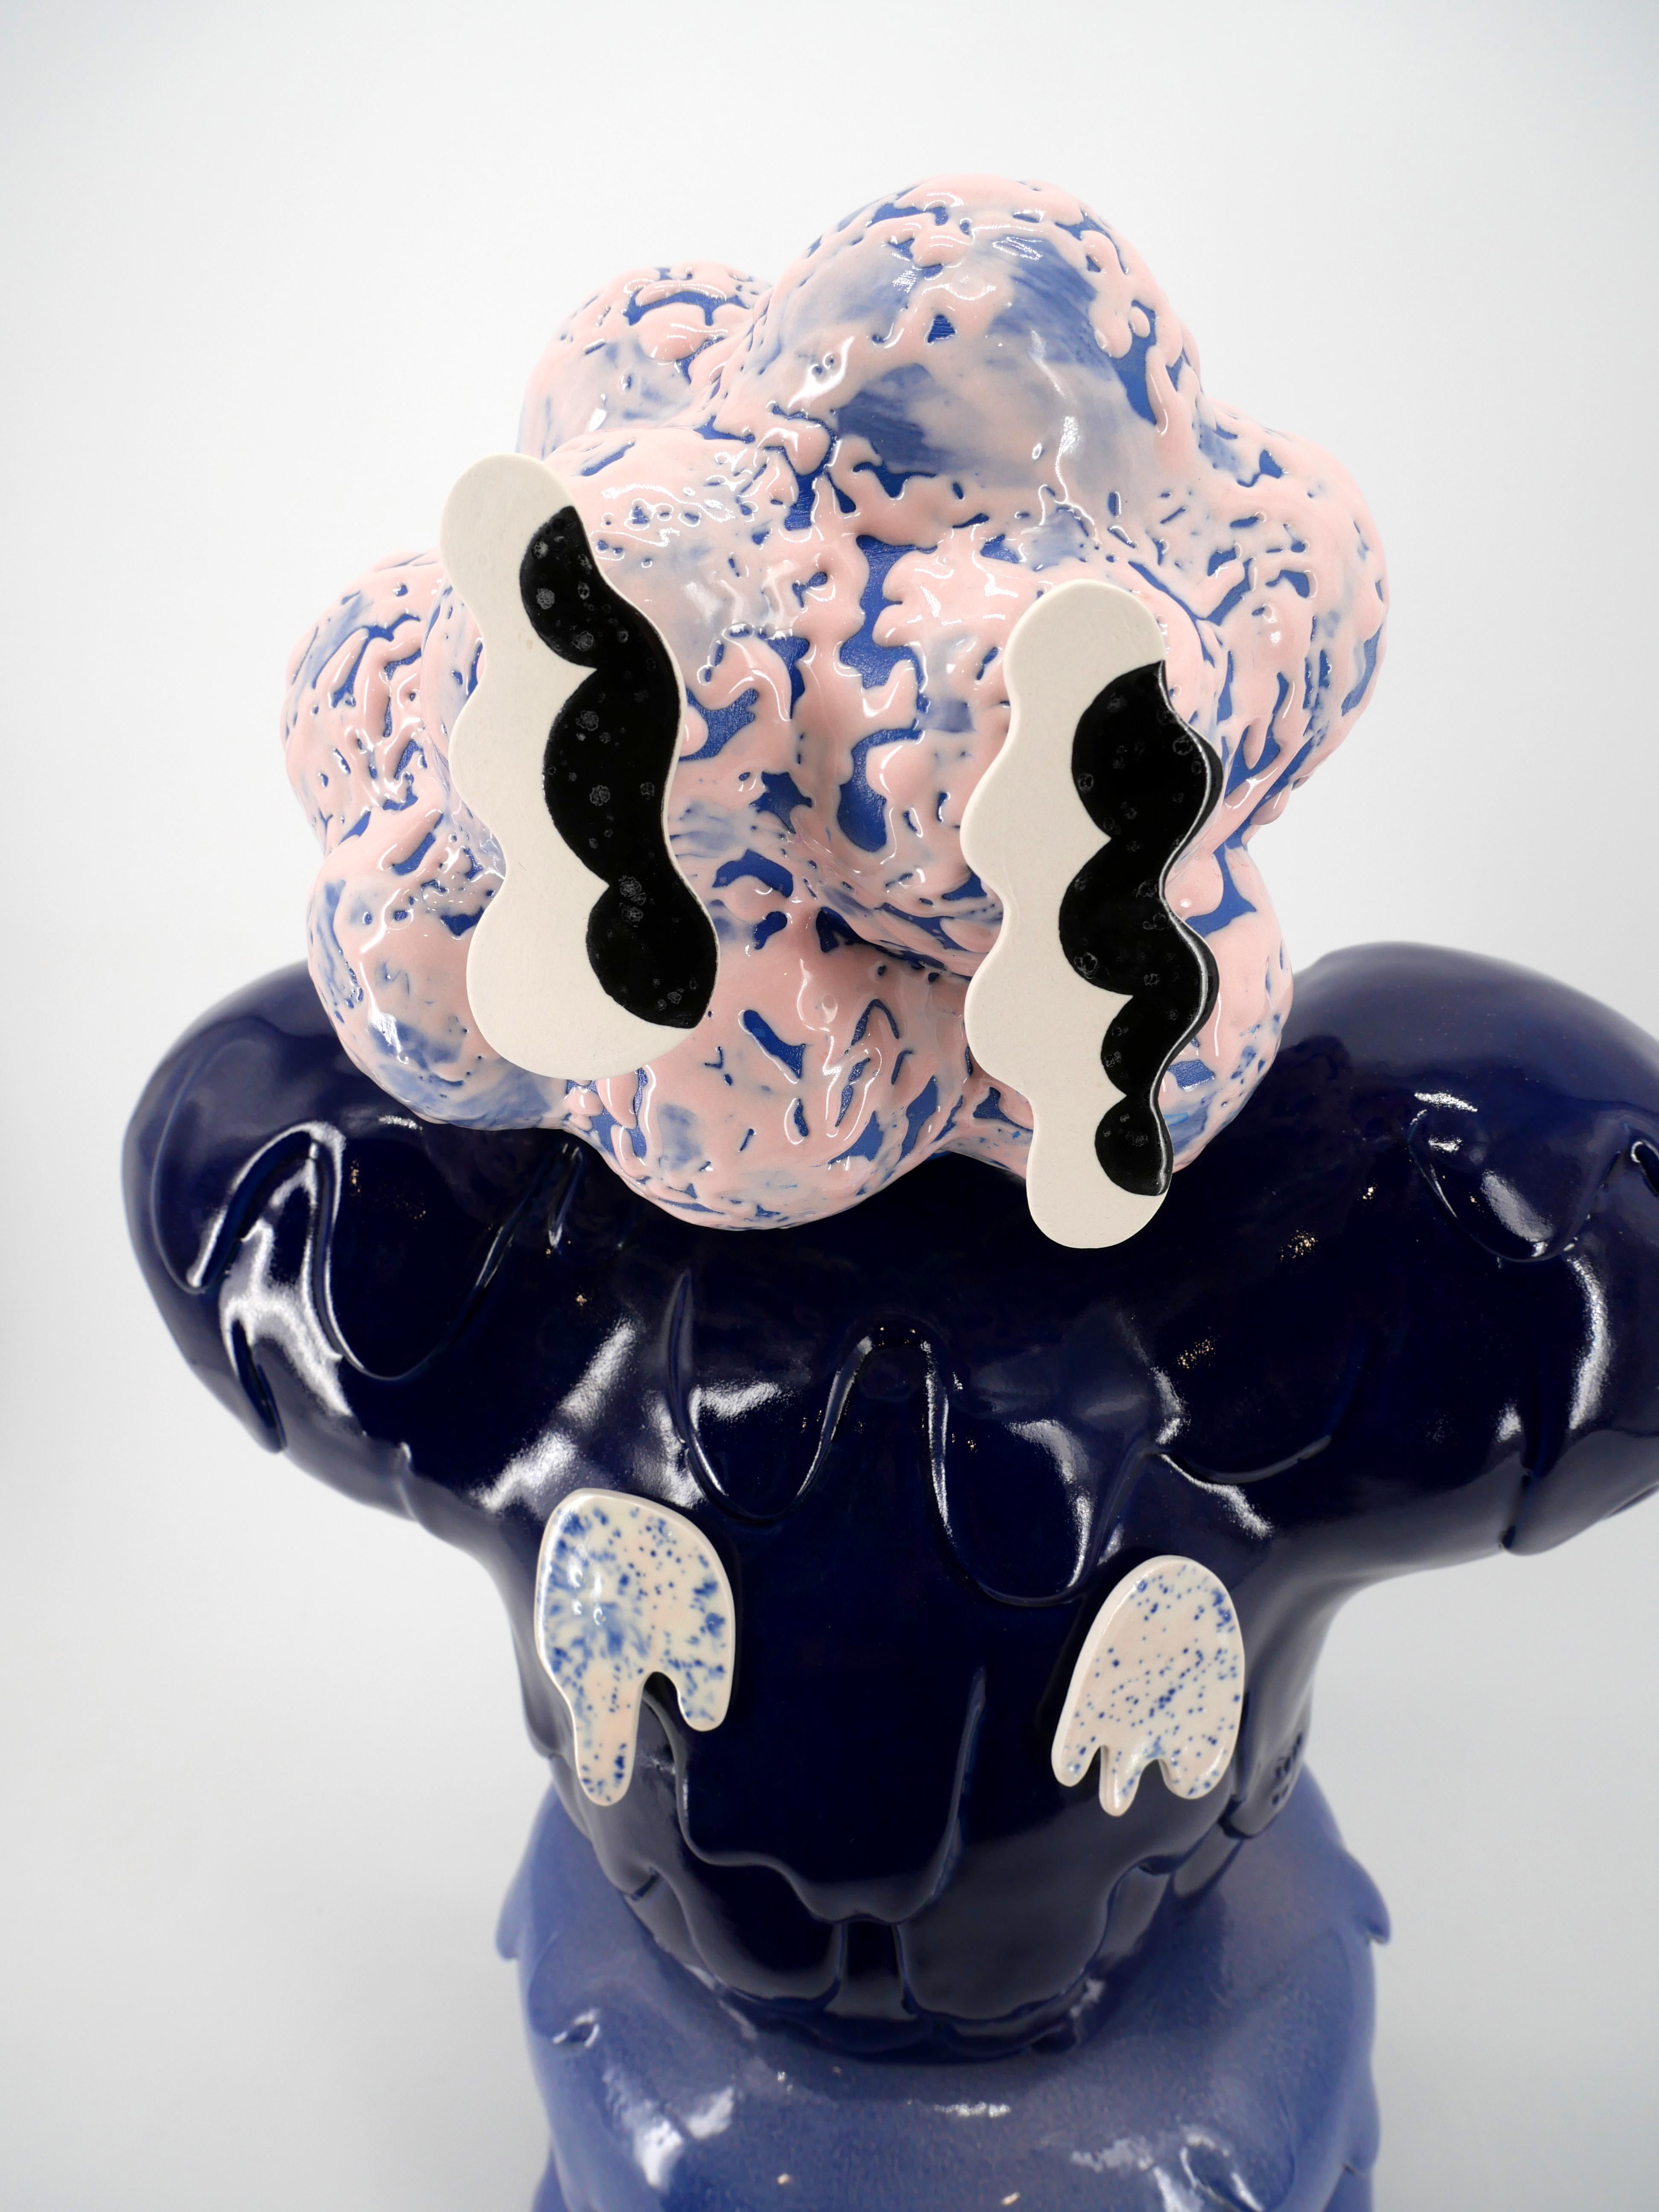 French Melting Koala Playful Monster Ceramic Decorative Sculpture by Kartini Thomas For Sale